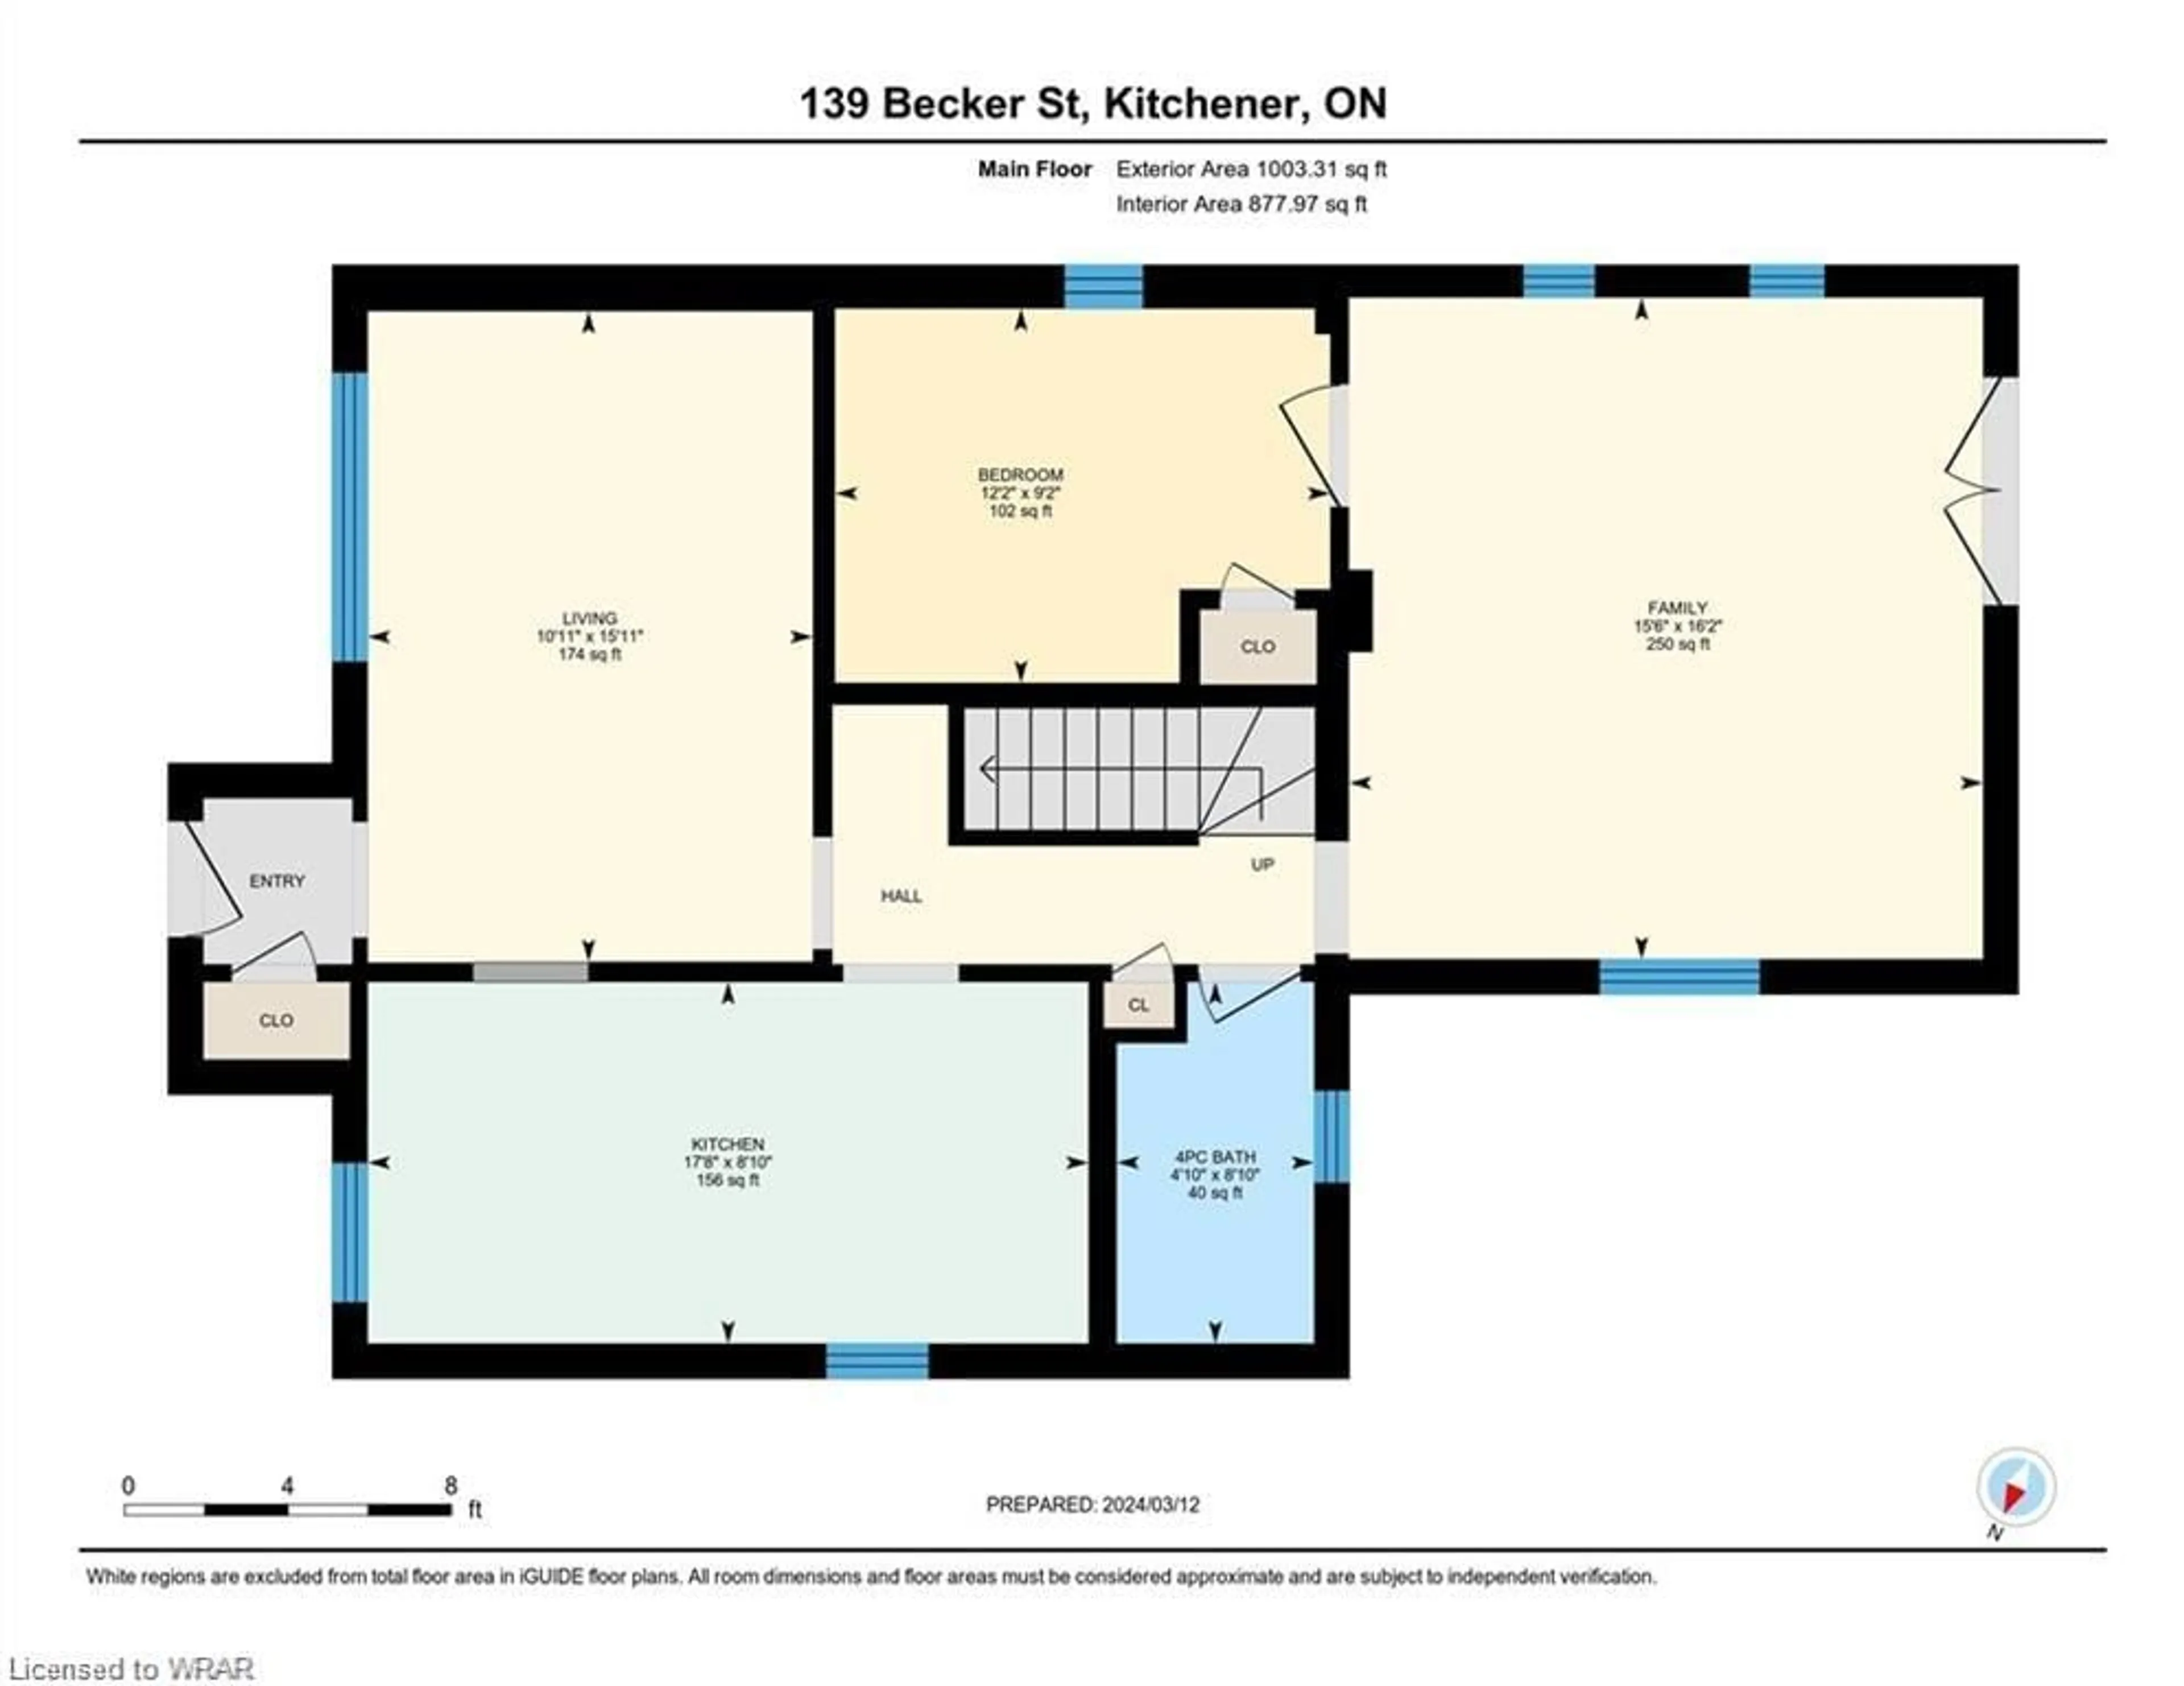 Floor plan for 139 Becker St, Kitchener Ontario N2B 1X3